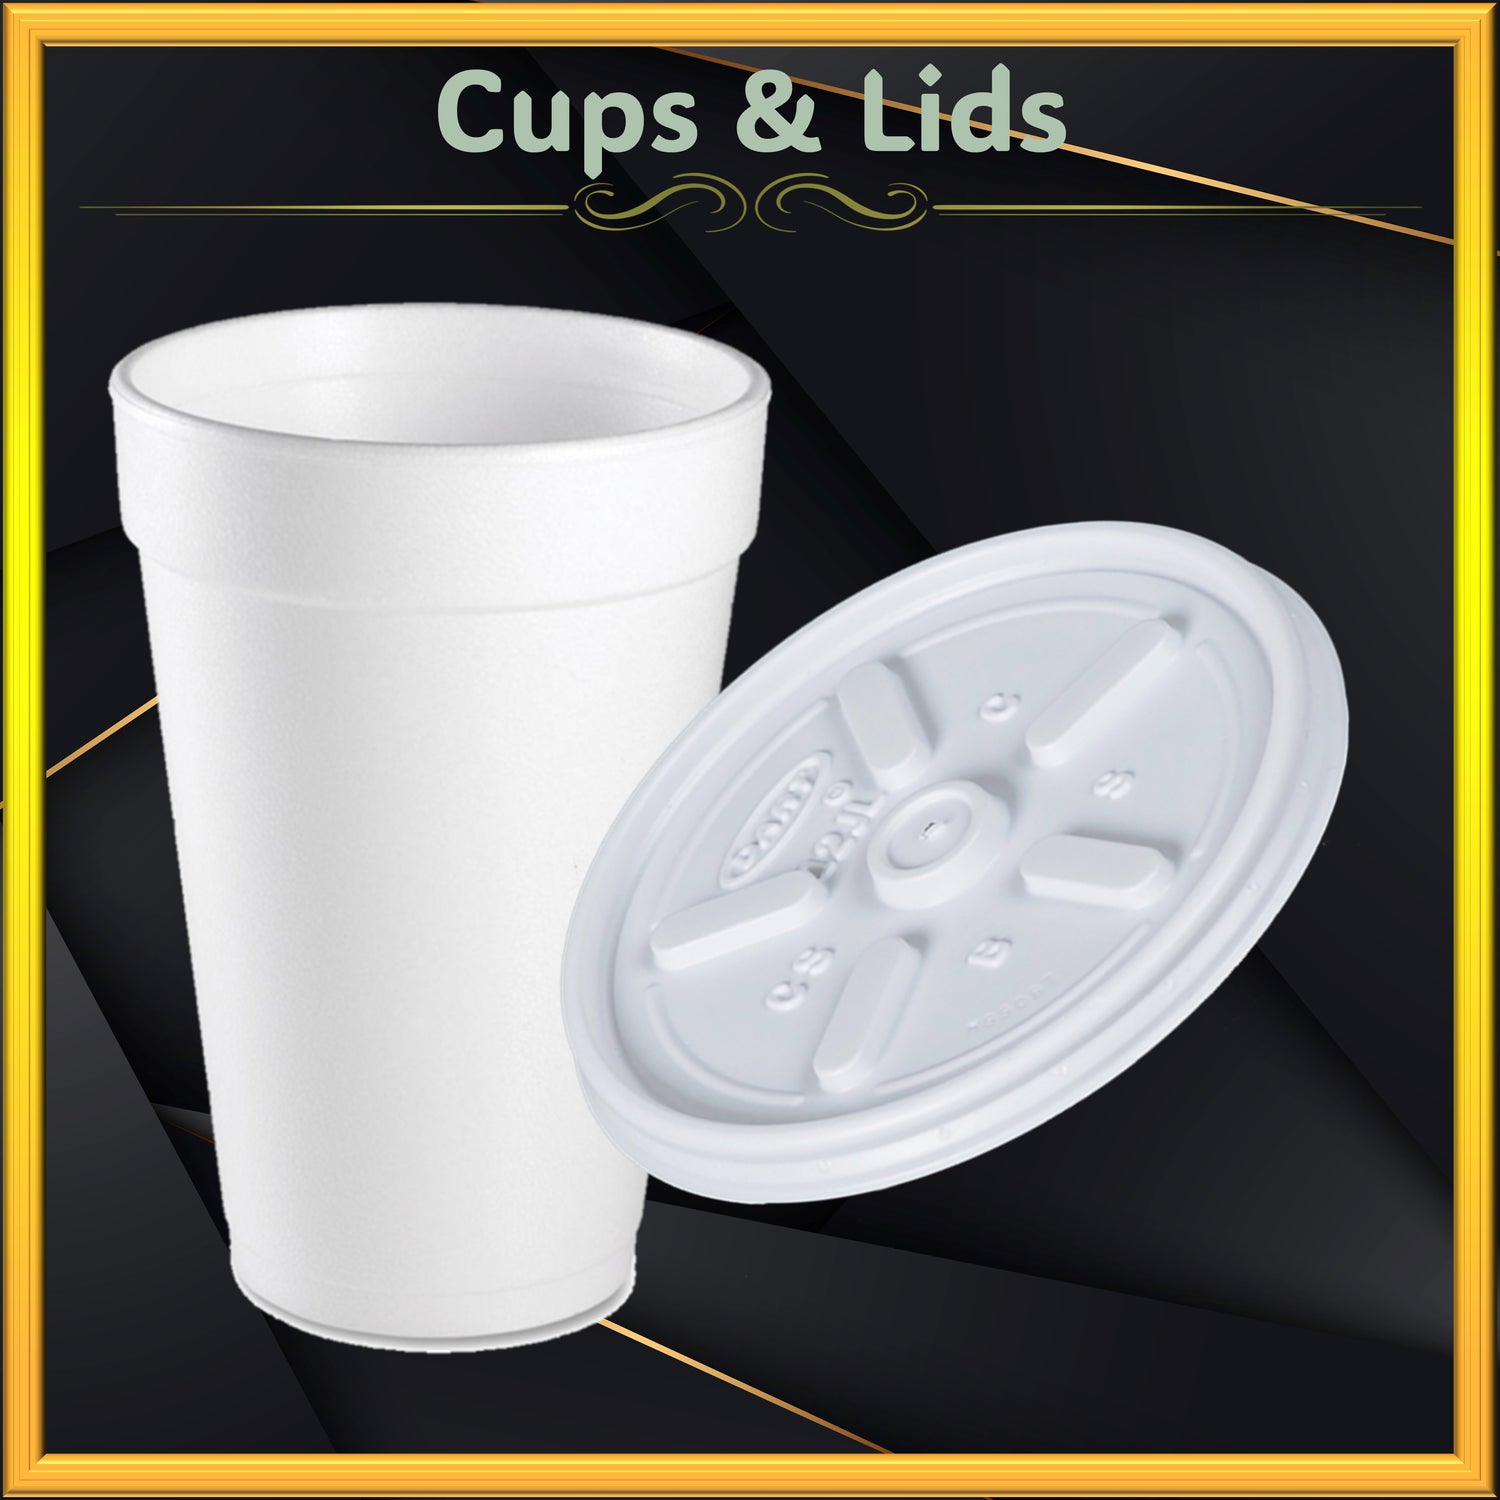 Cups & Lids